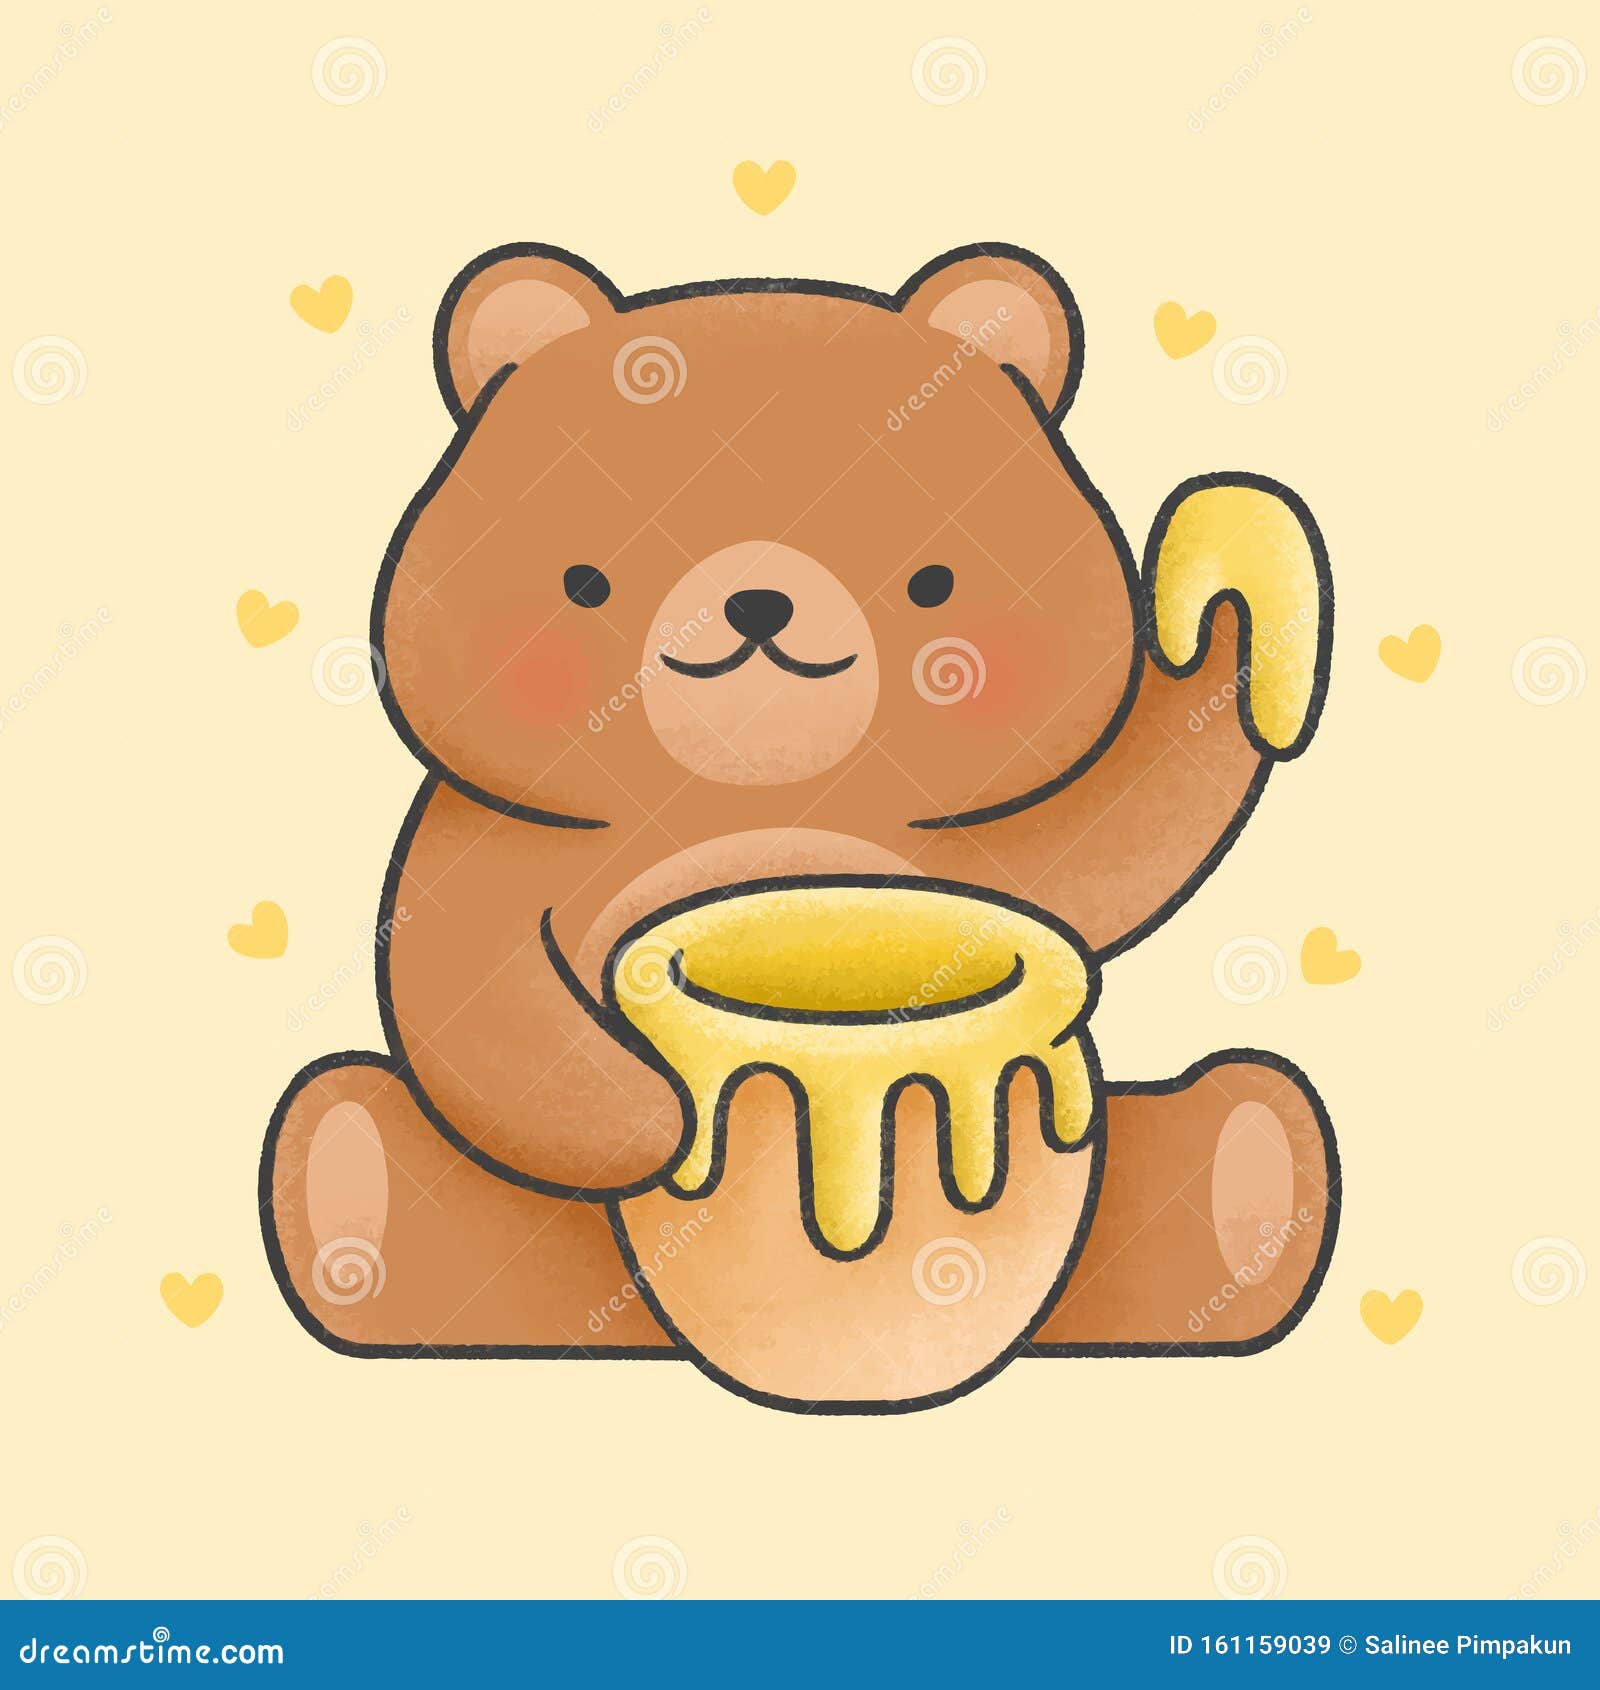 Cute Teddy Bear Holding Honey Jar Cartoon Hand Drawn Style